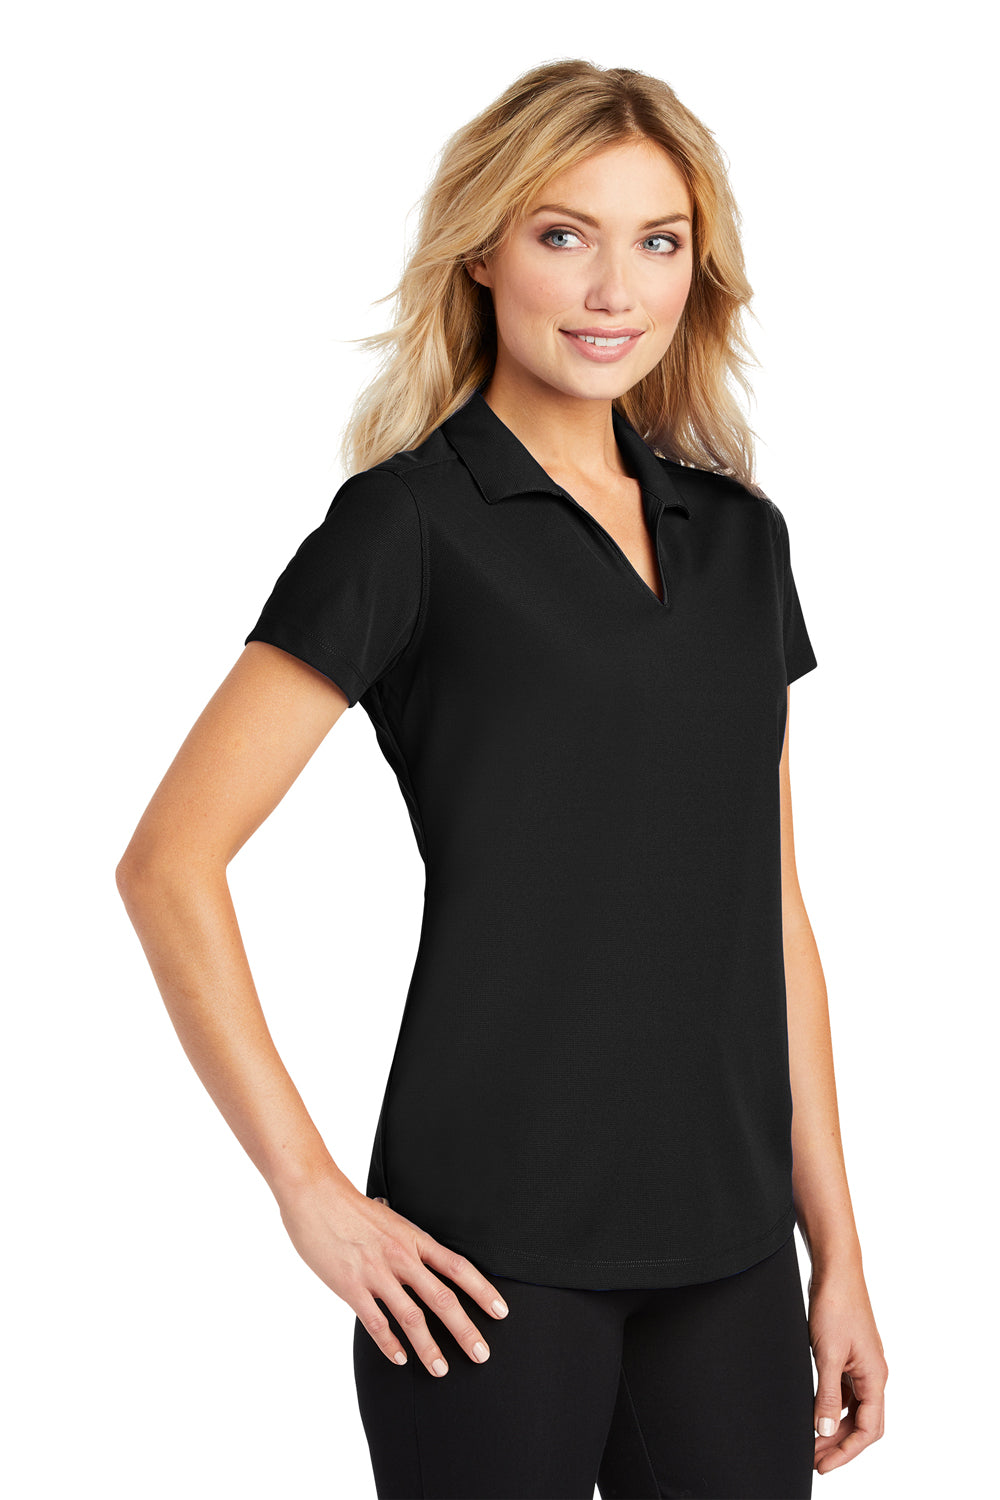 Port Authority L572 Womens Dry Zone Moisture Wicking Short Sleeve Polo Shirt Black 3Q